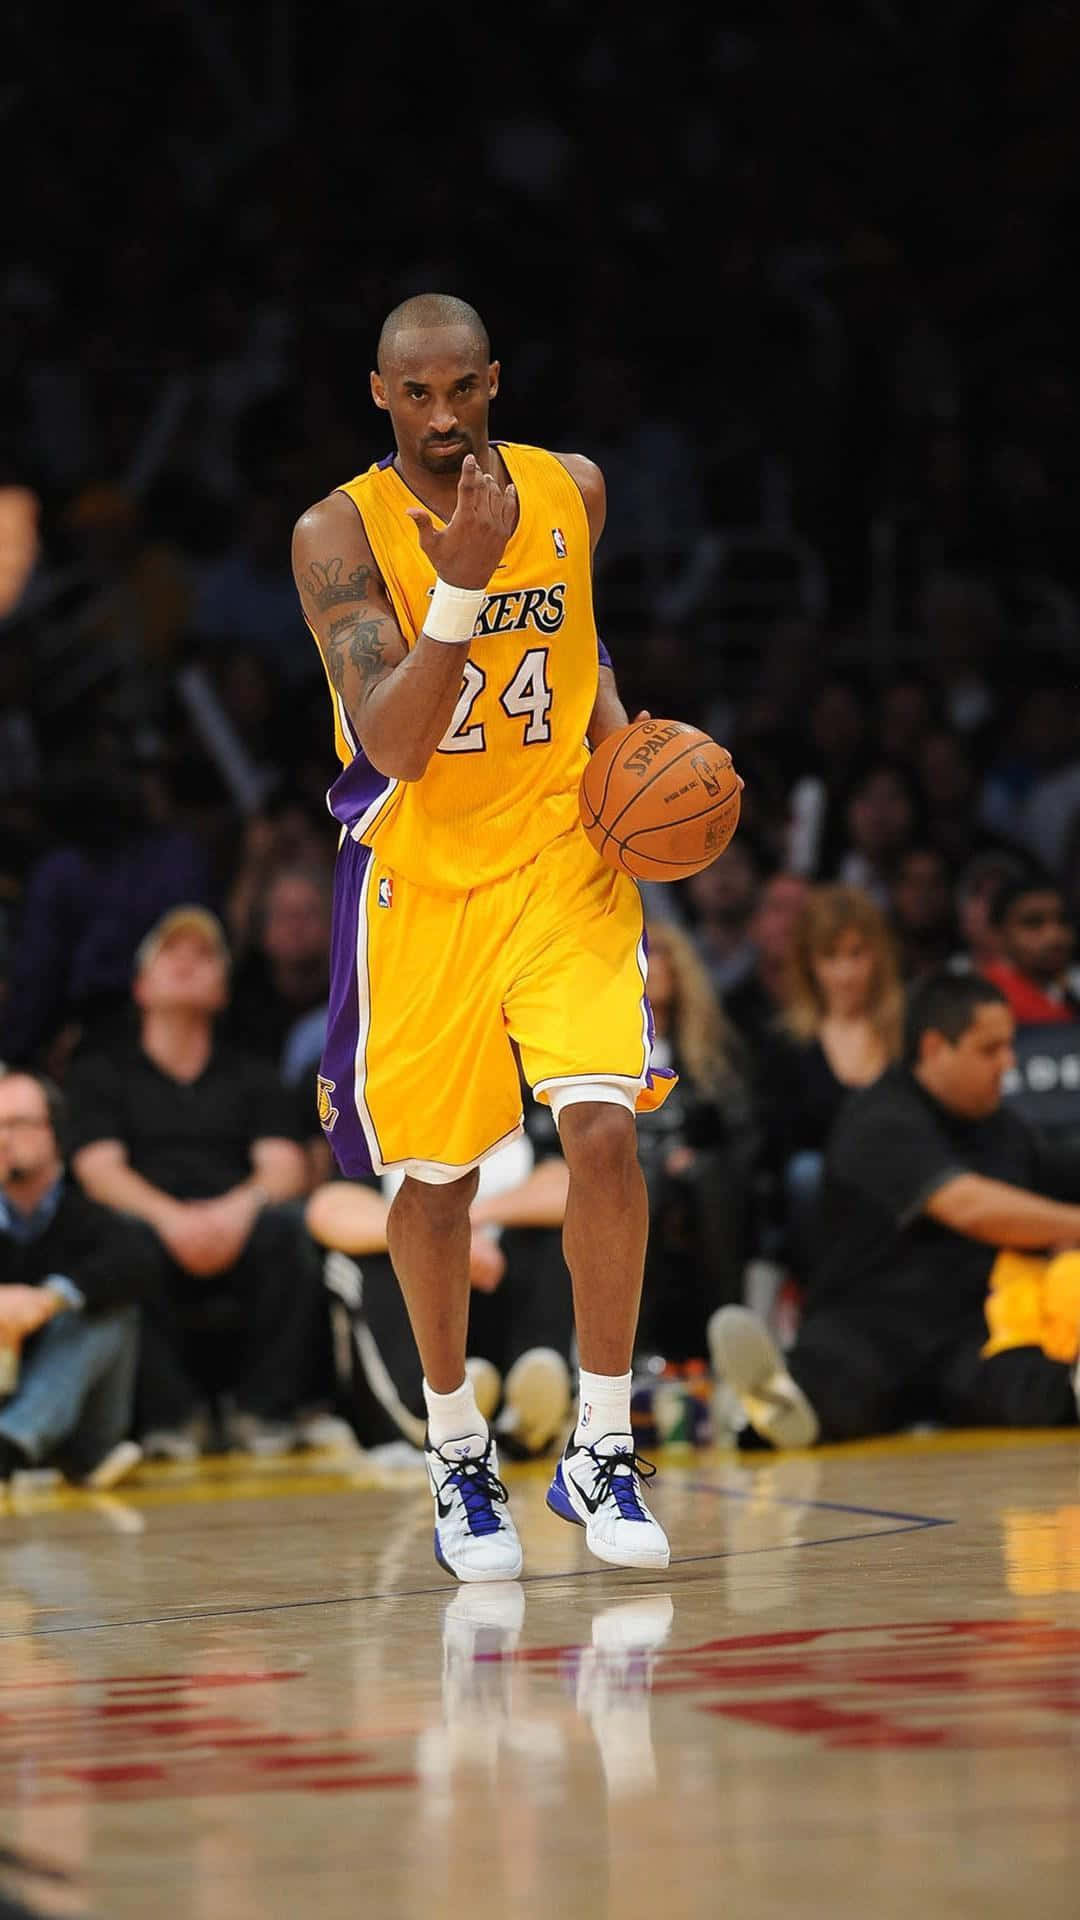 Kobe Bryant Basketball Walking On Court Wallpaper